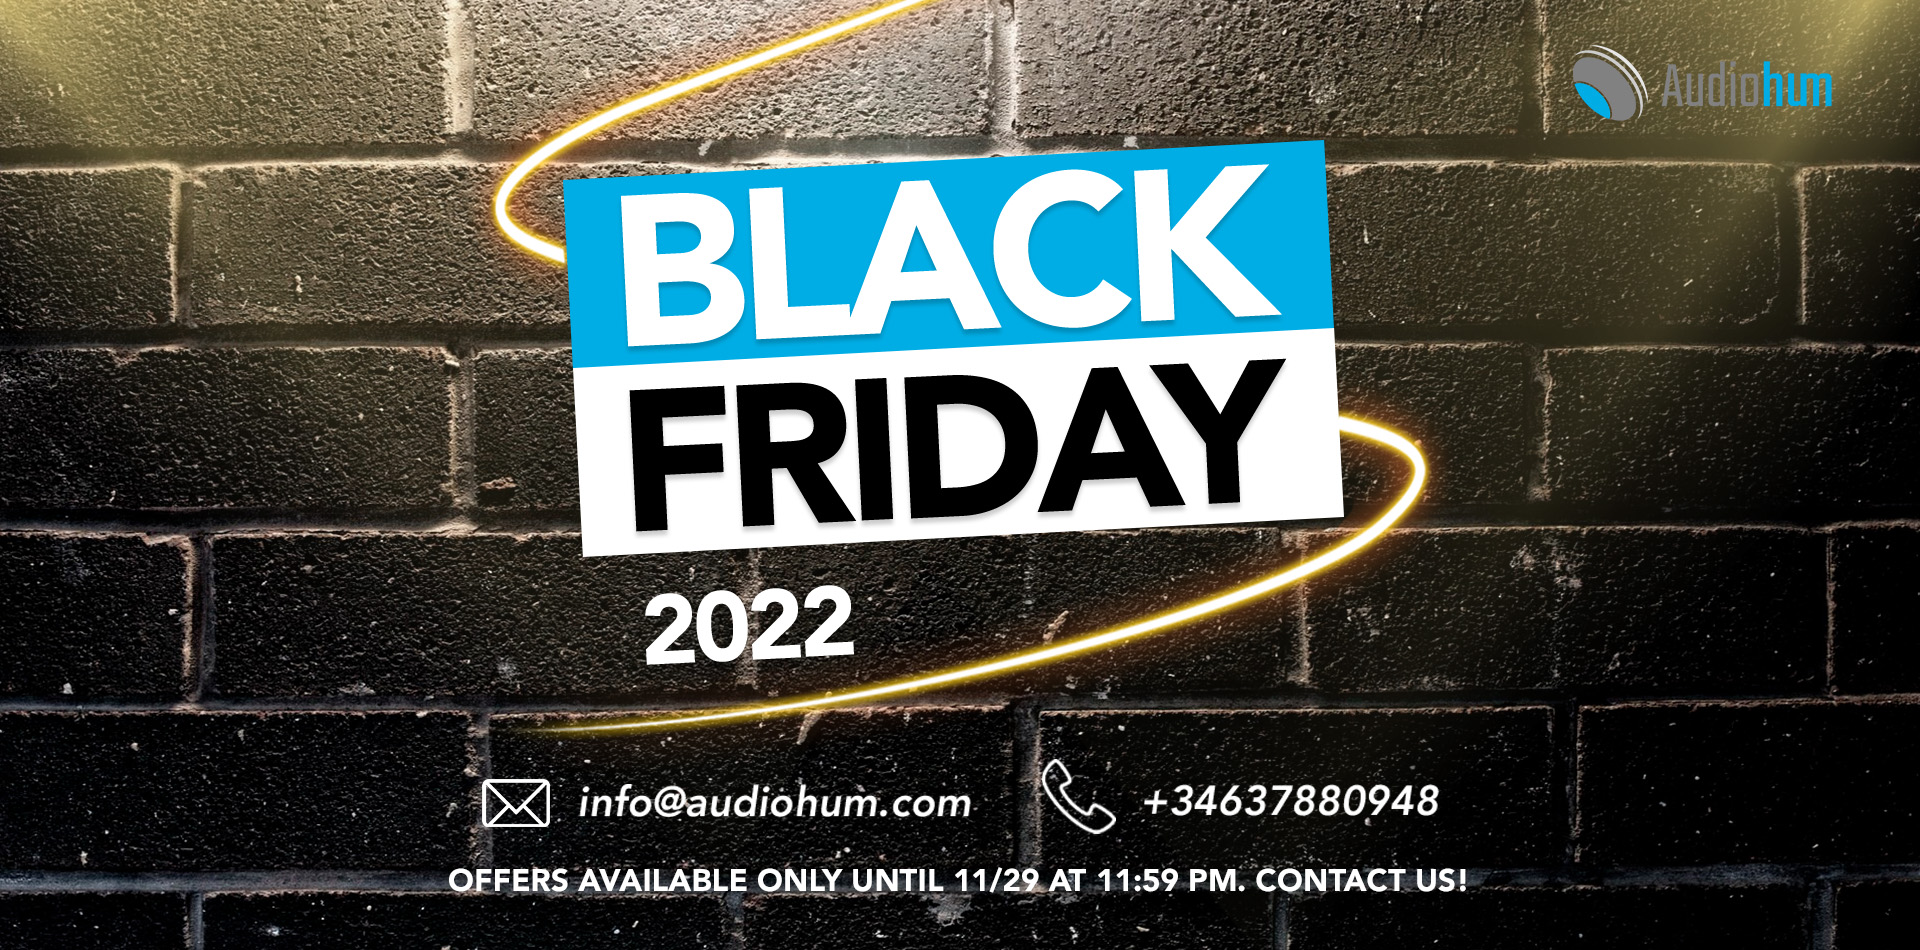 BlackFriday discounts 2022 by Audiohum